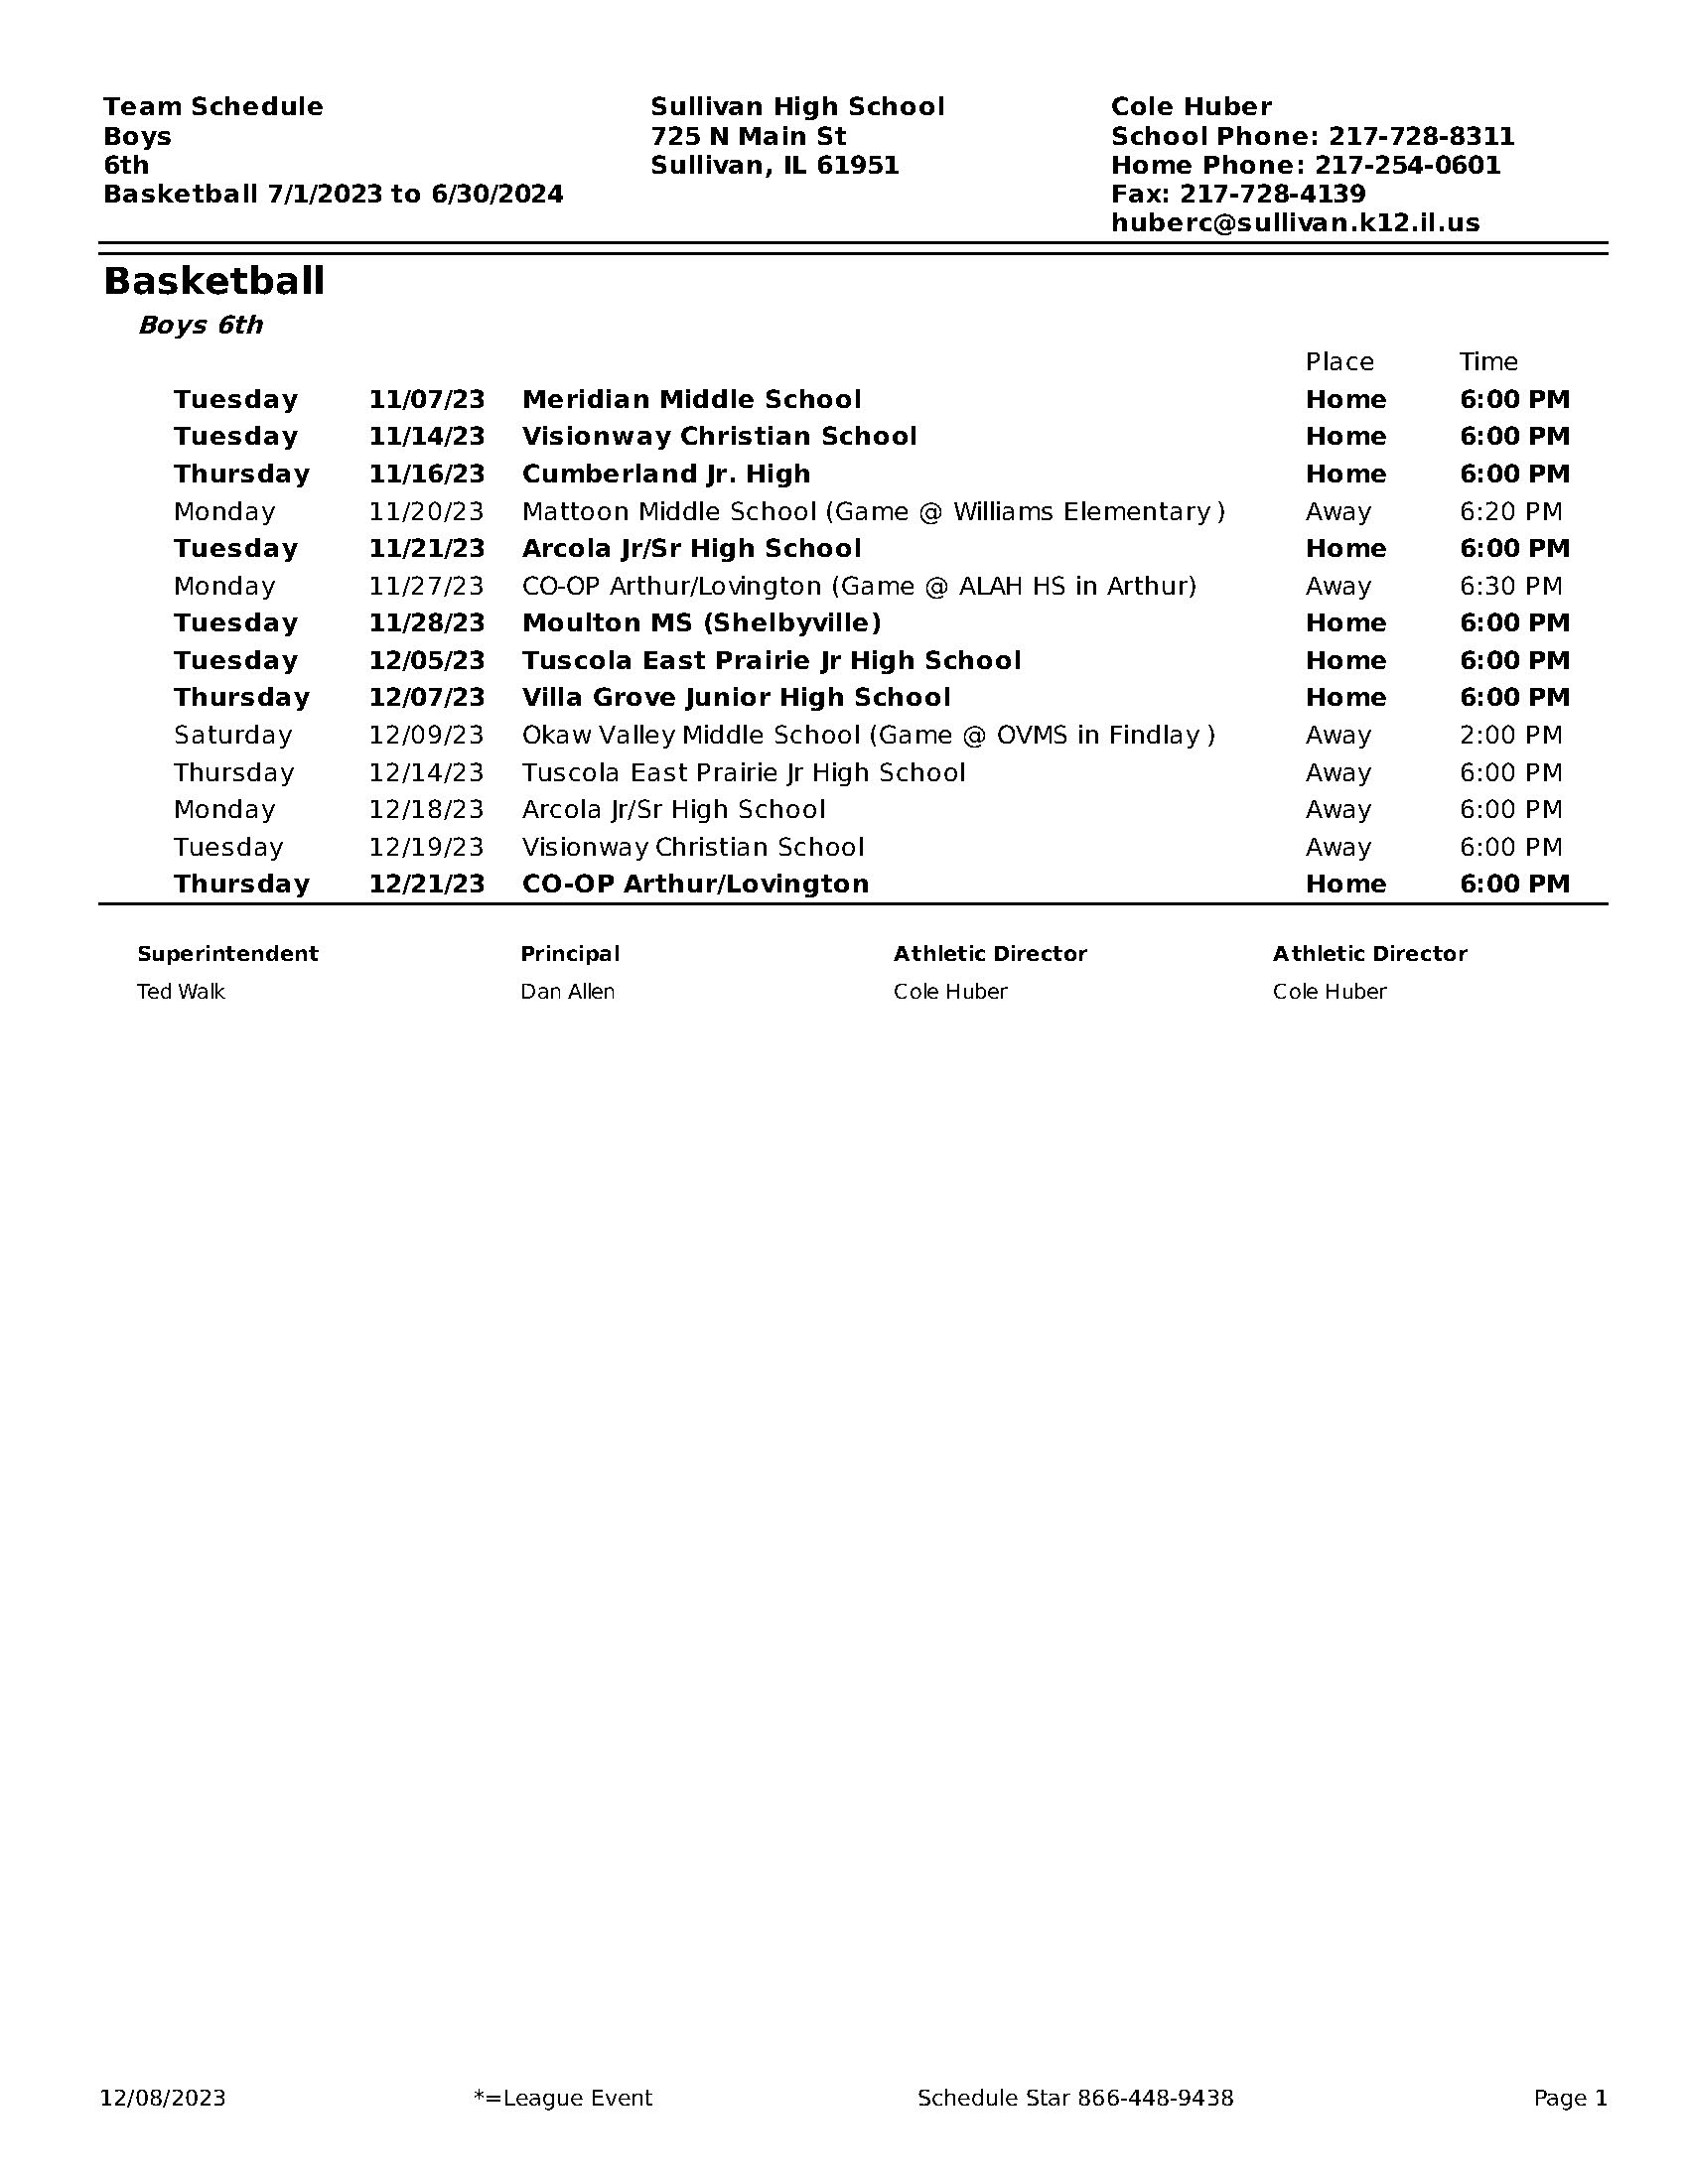 6th Grade Schedule